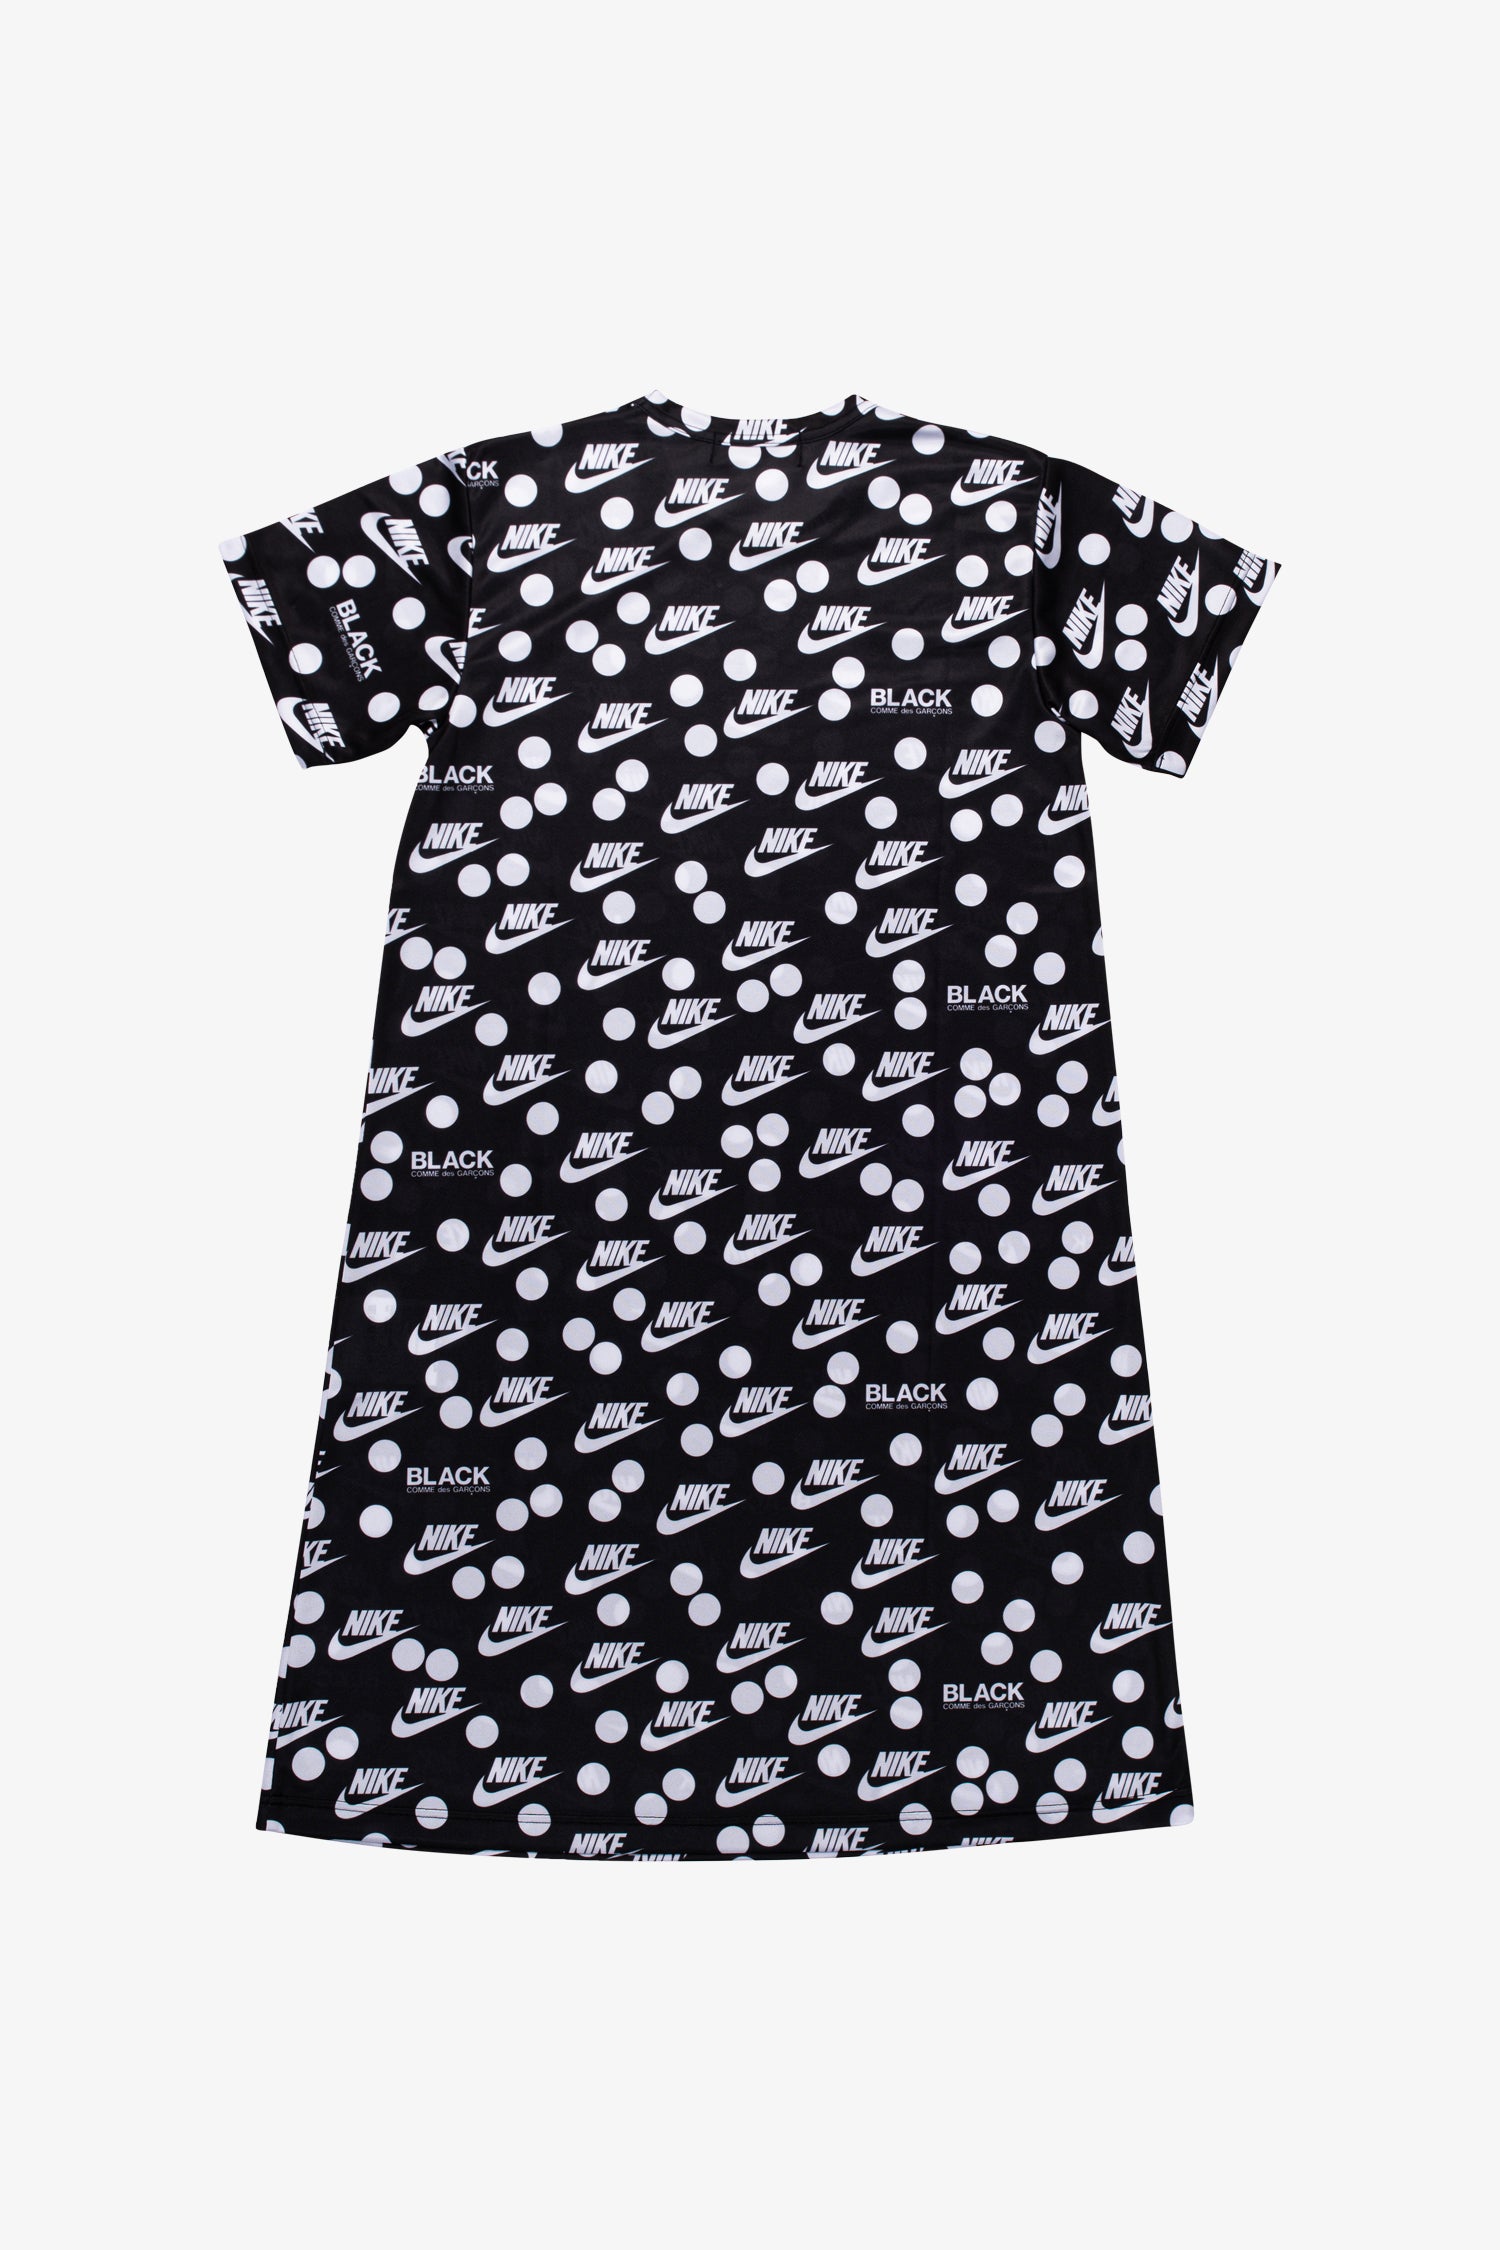 Selectshop FRAME - COMME DES GARCONS BLACK Nike Polka Dot Dress T-Shirt Dubai